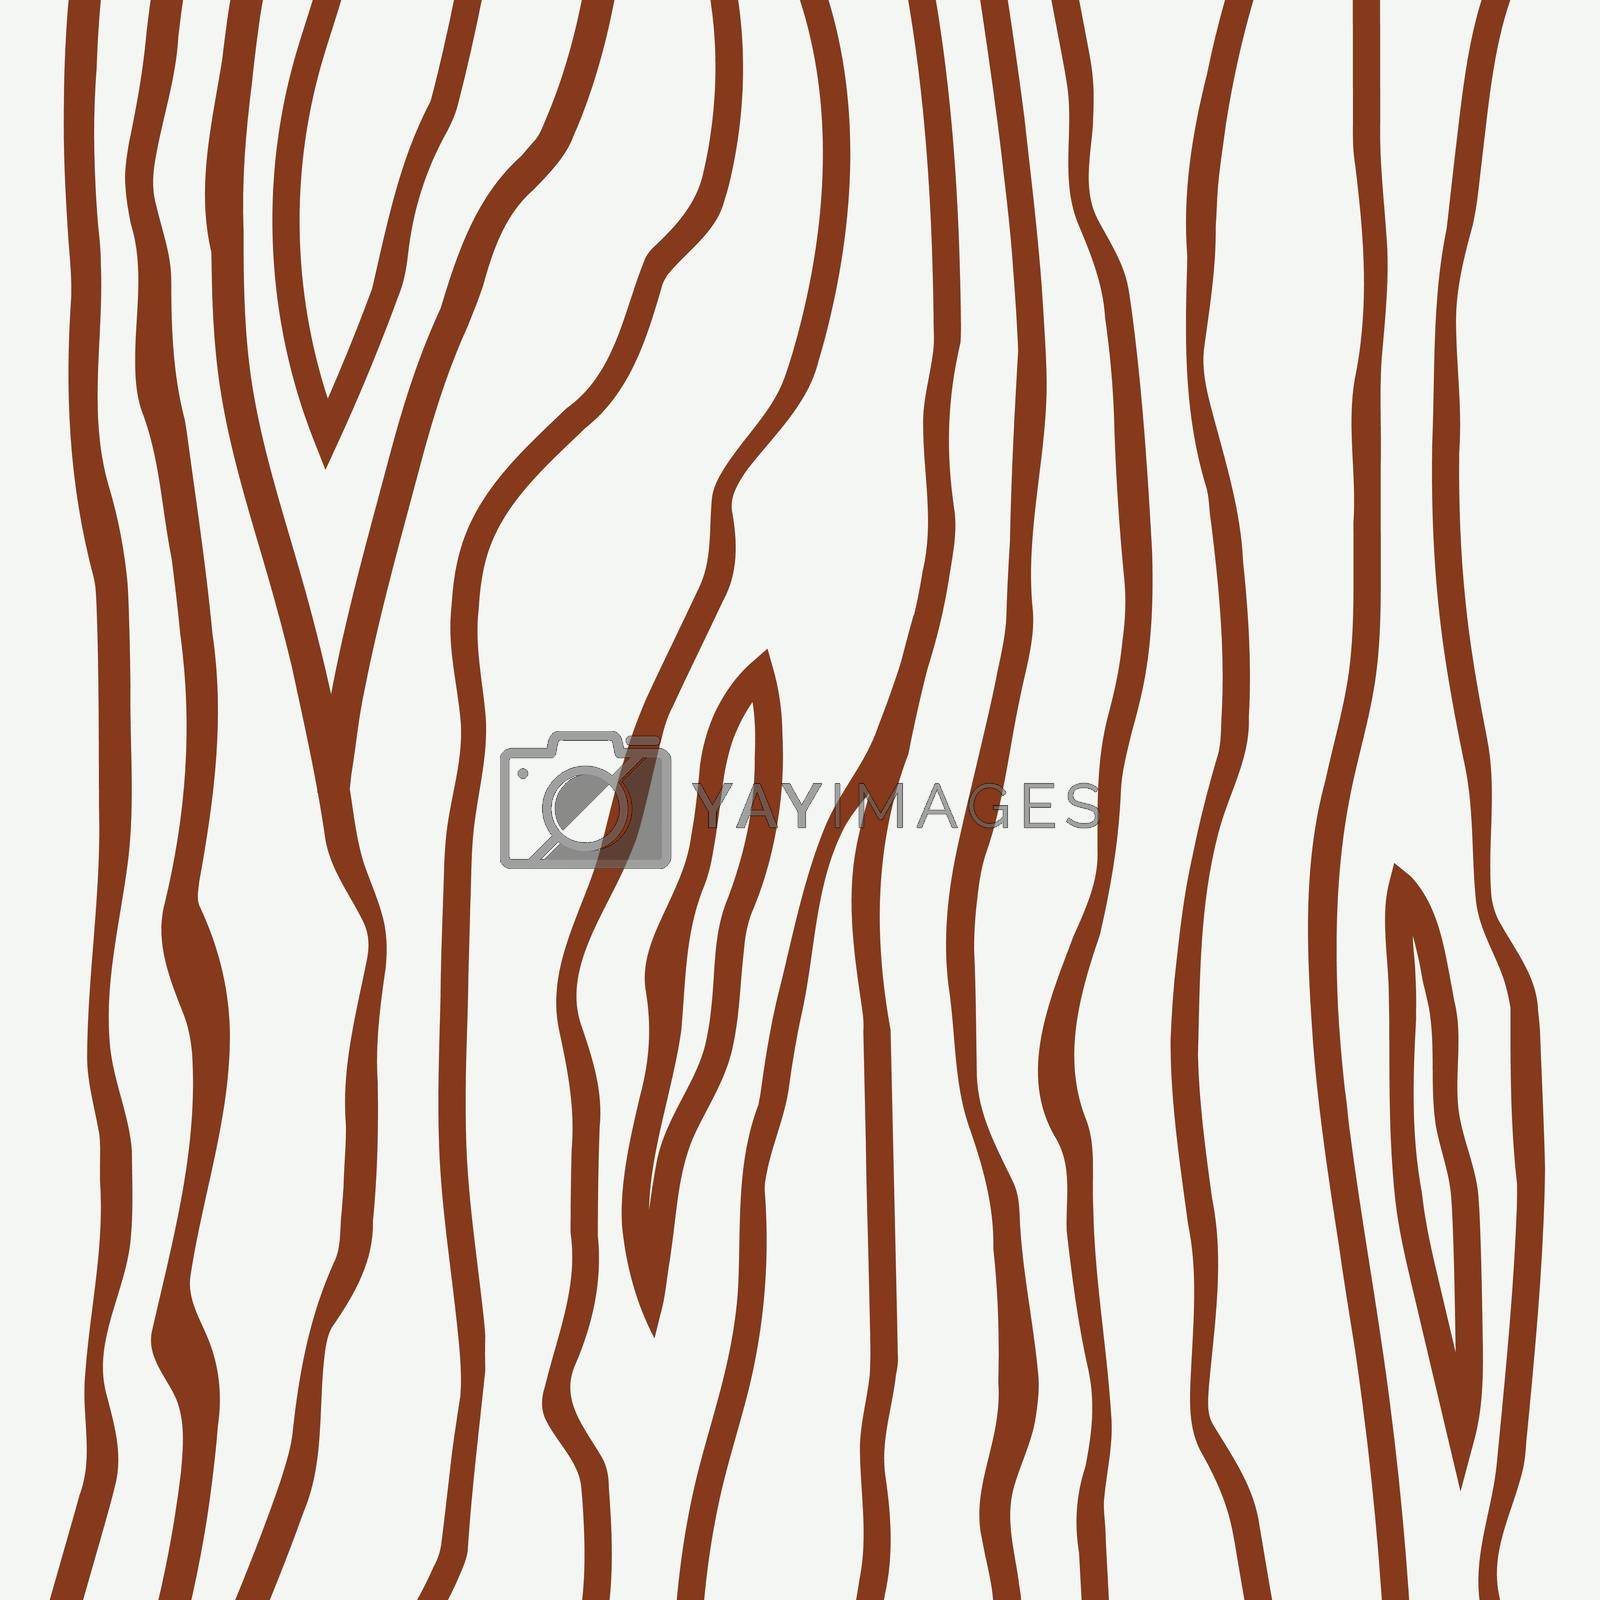 Wooden texture seamless background. vector illustration.